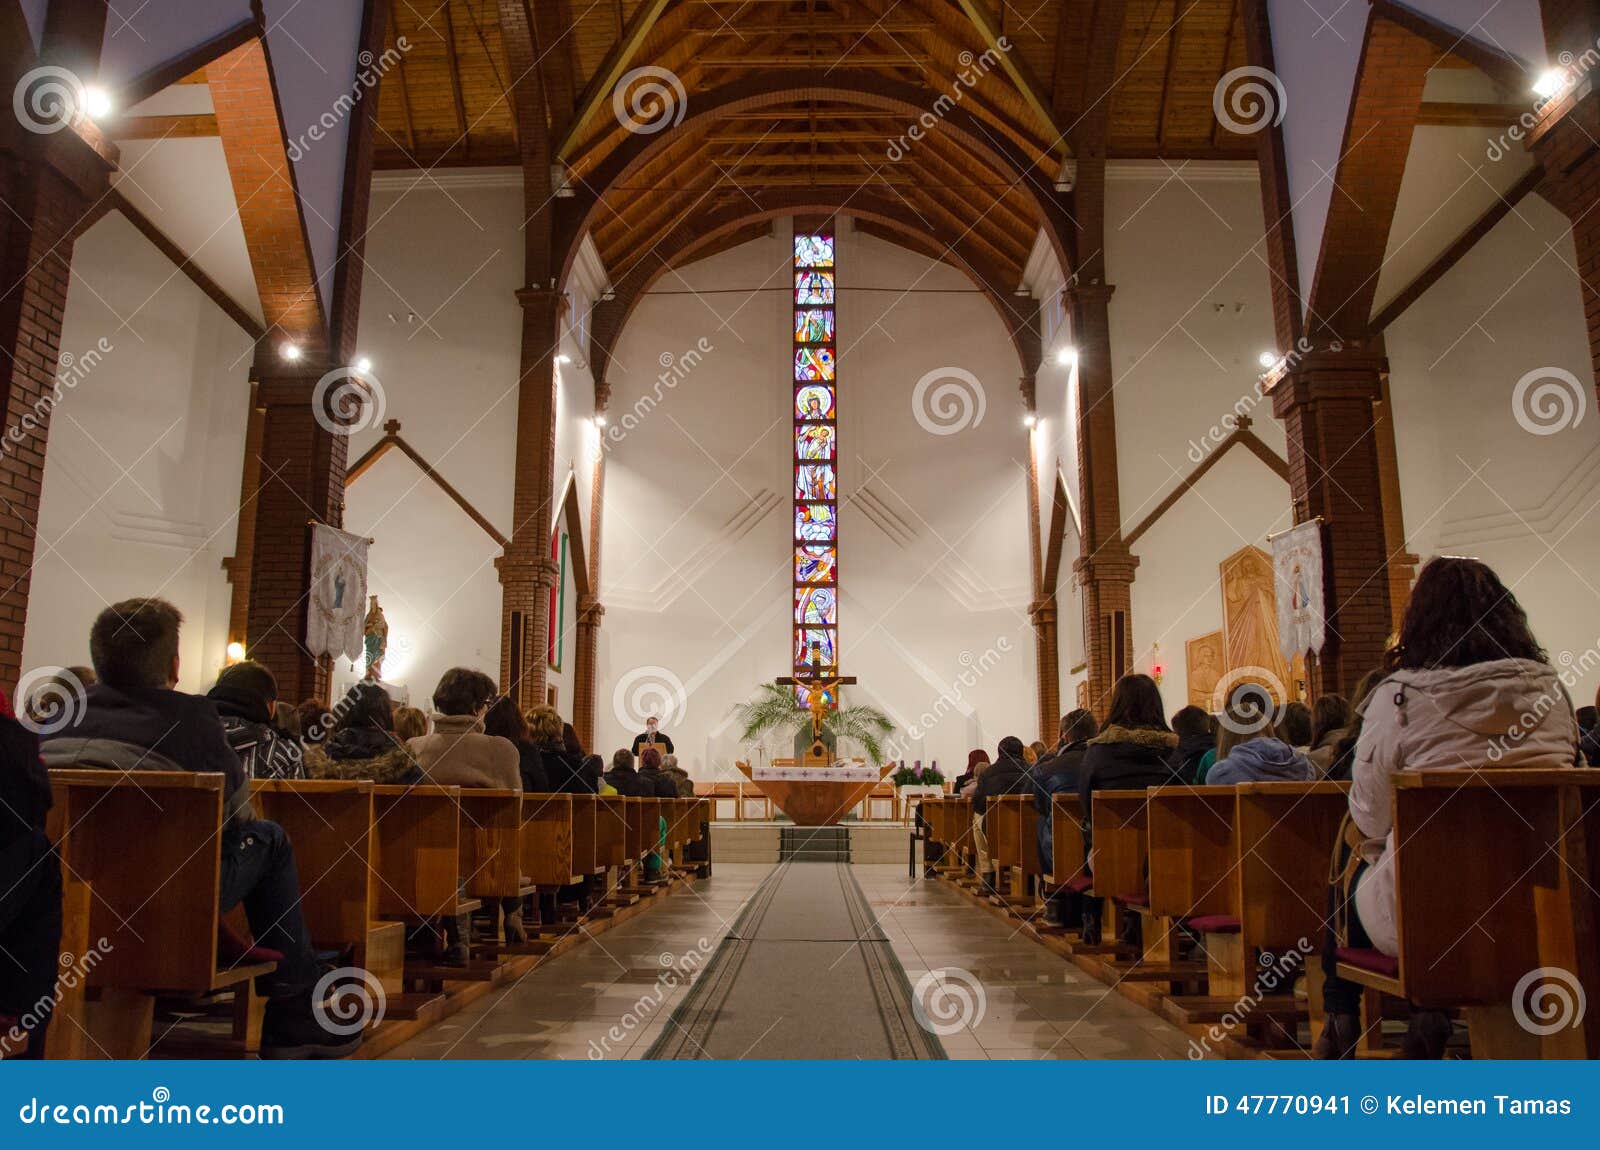 Iglesia interior. Dentro de una iglesia católica en masa